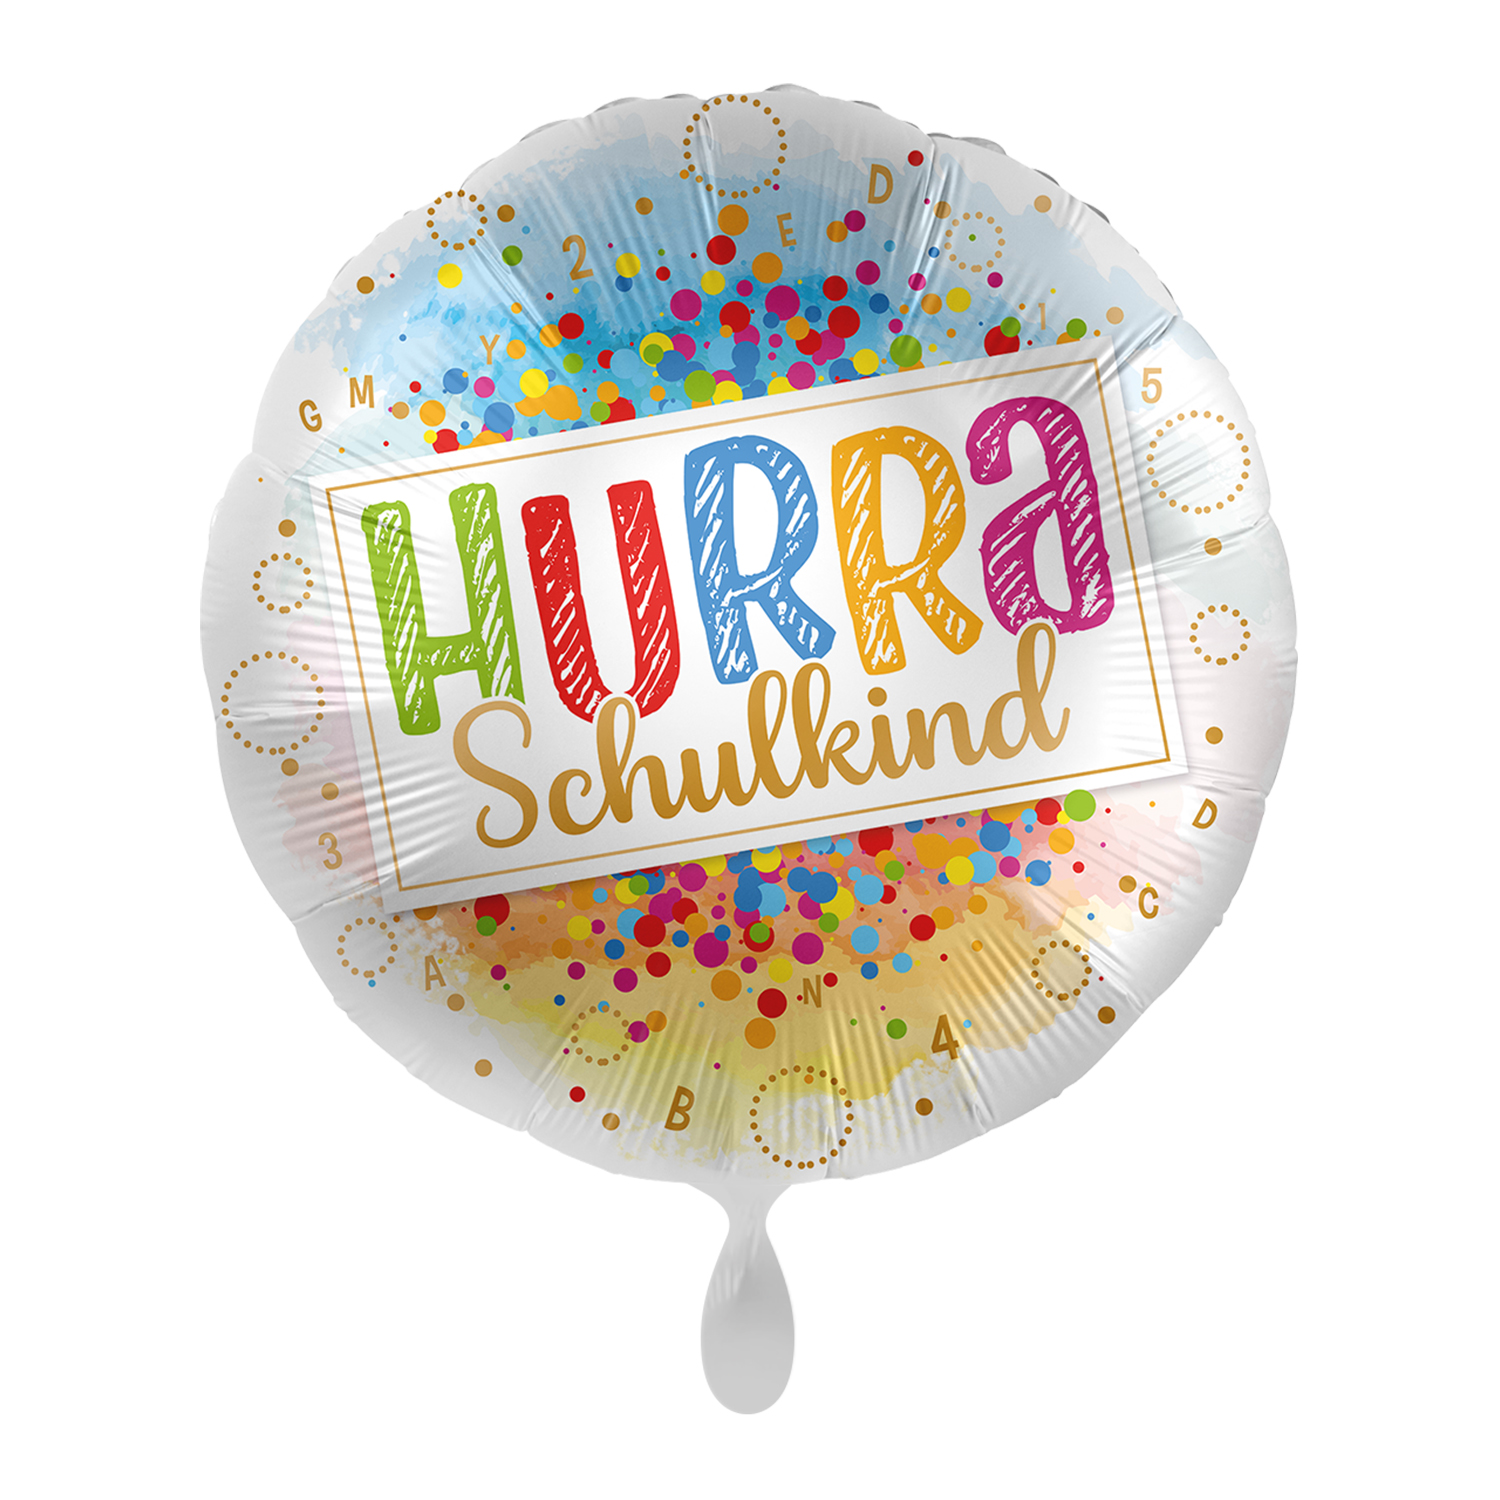 NEU Folienballon - Hurra Schulkind - ca. 45cm Durchmesser